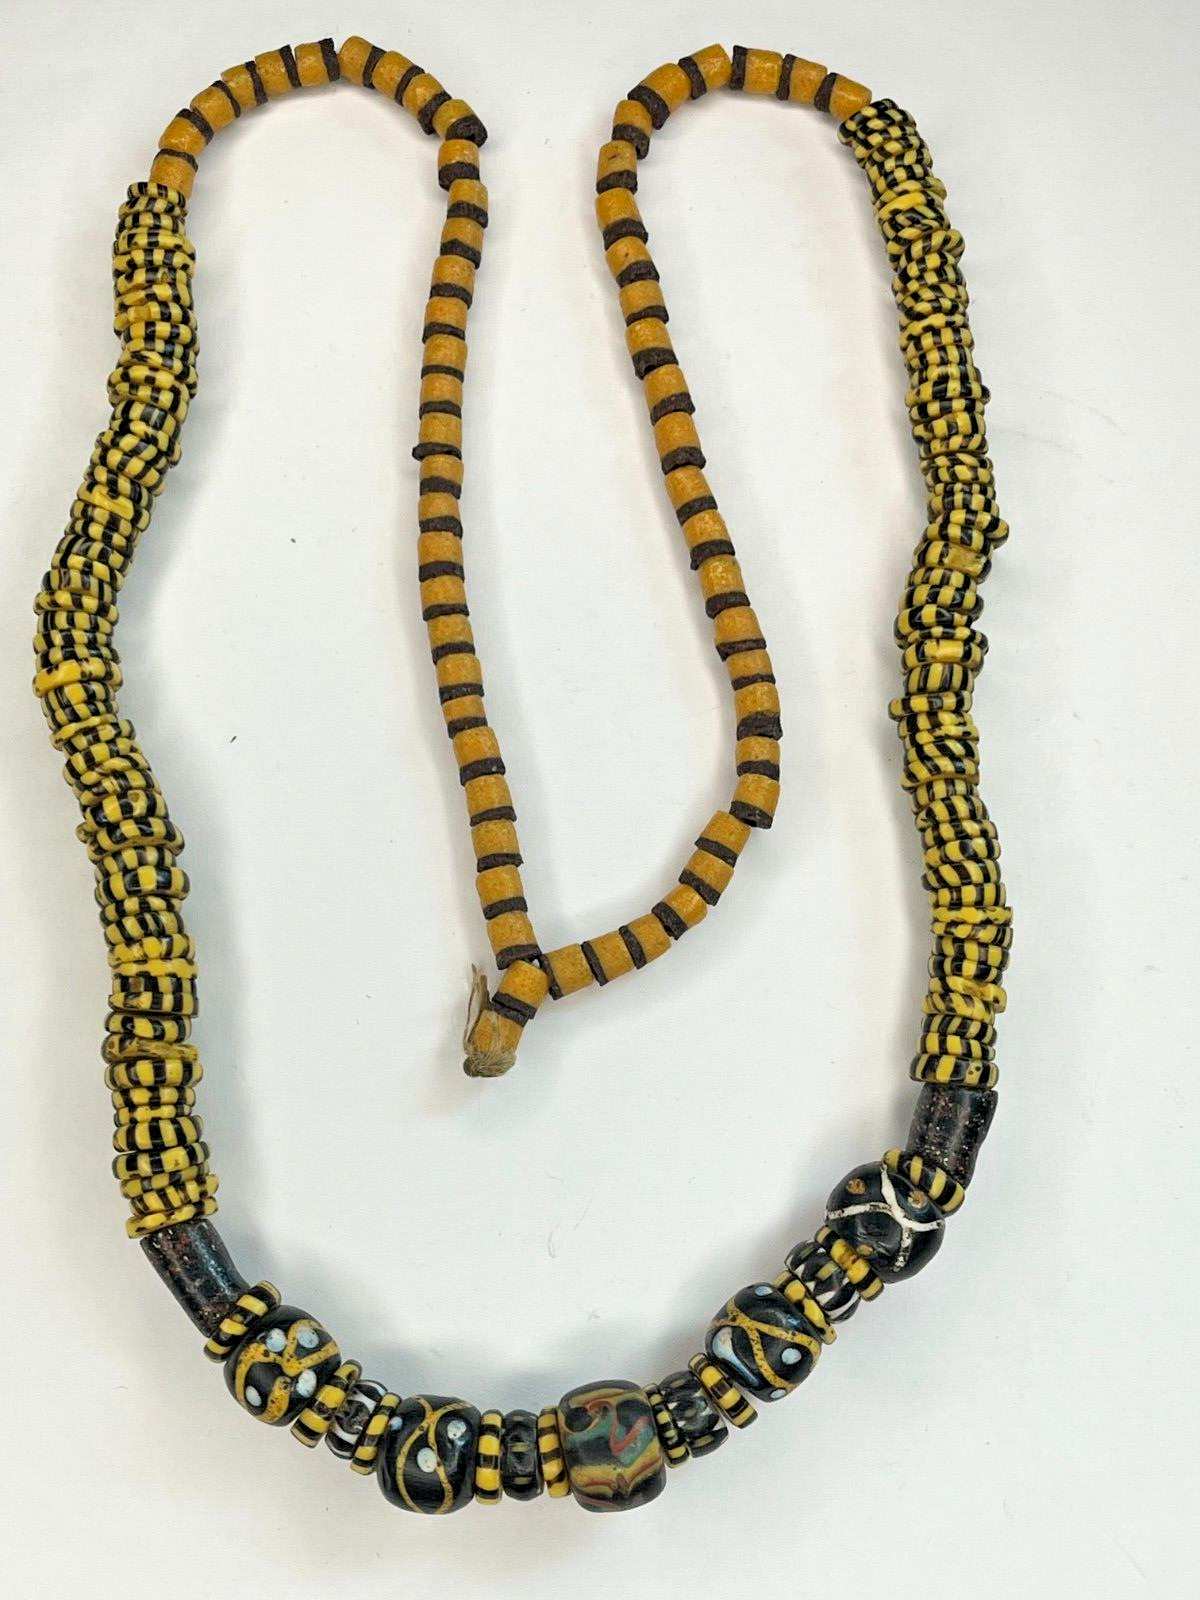 Antique Venetian Aja African Trade Beads; Criss-Cross, Yellow Jacket & Sandcast